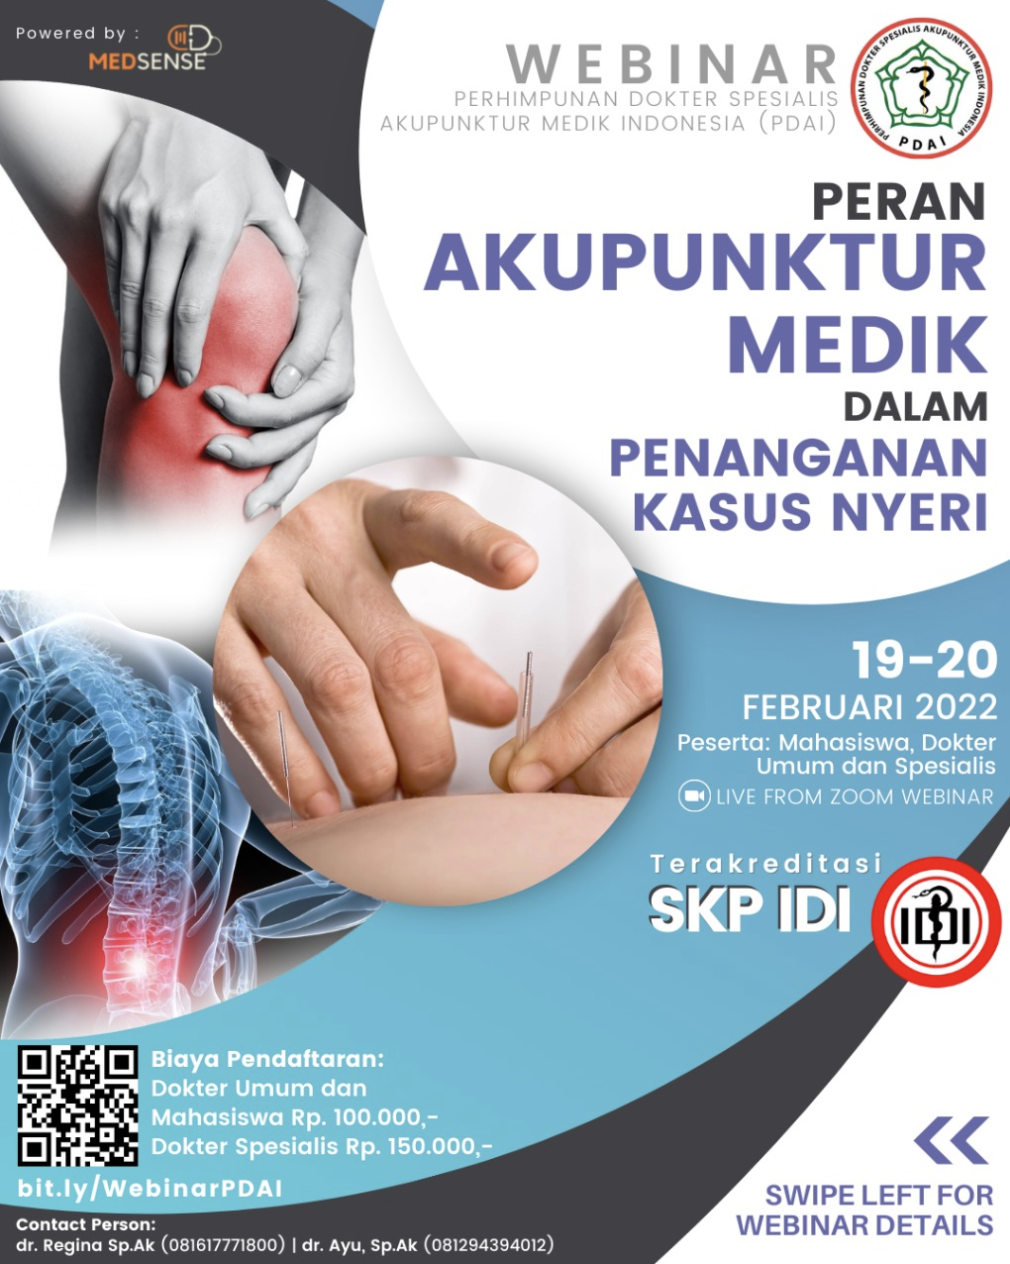 Webinar PDAI: “Peran Akupunktur Medik dalam Penanganan Kasus Nyeri” - Perhimpunan Dokter Spesialis Akupunktur Medik Indonesia